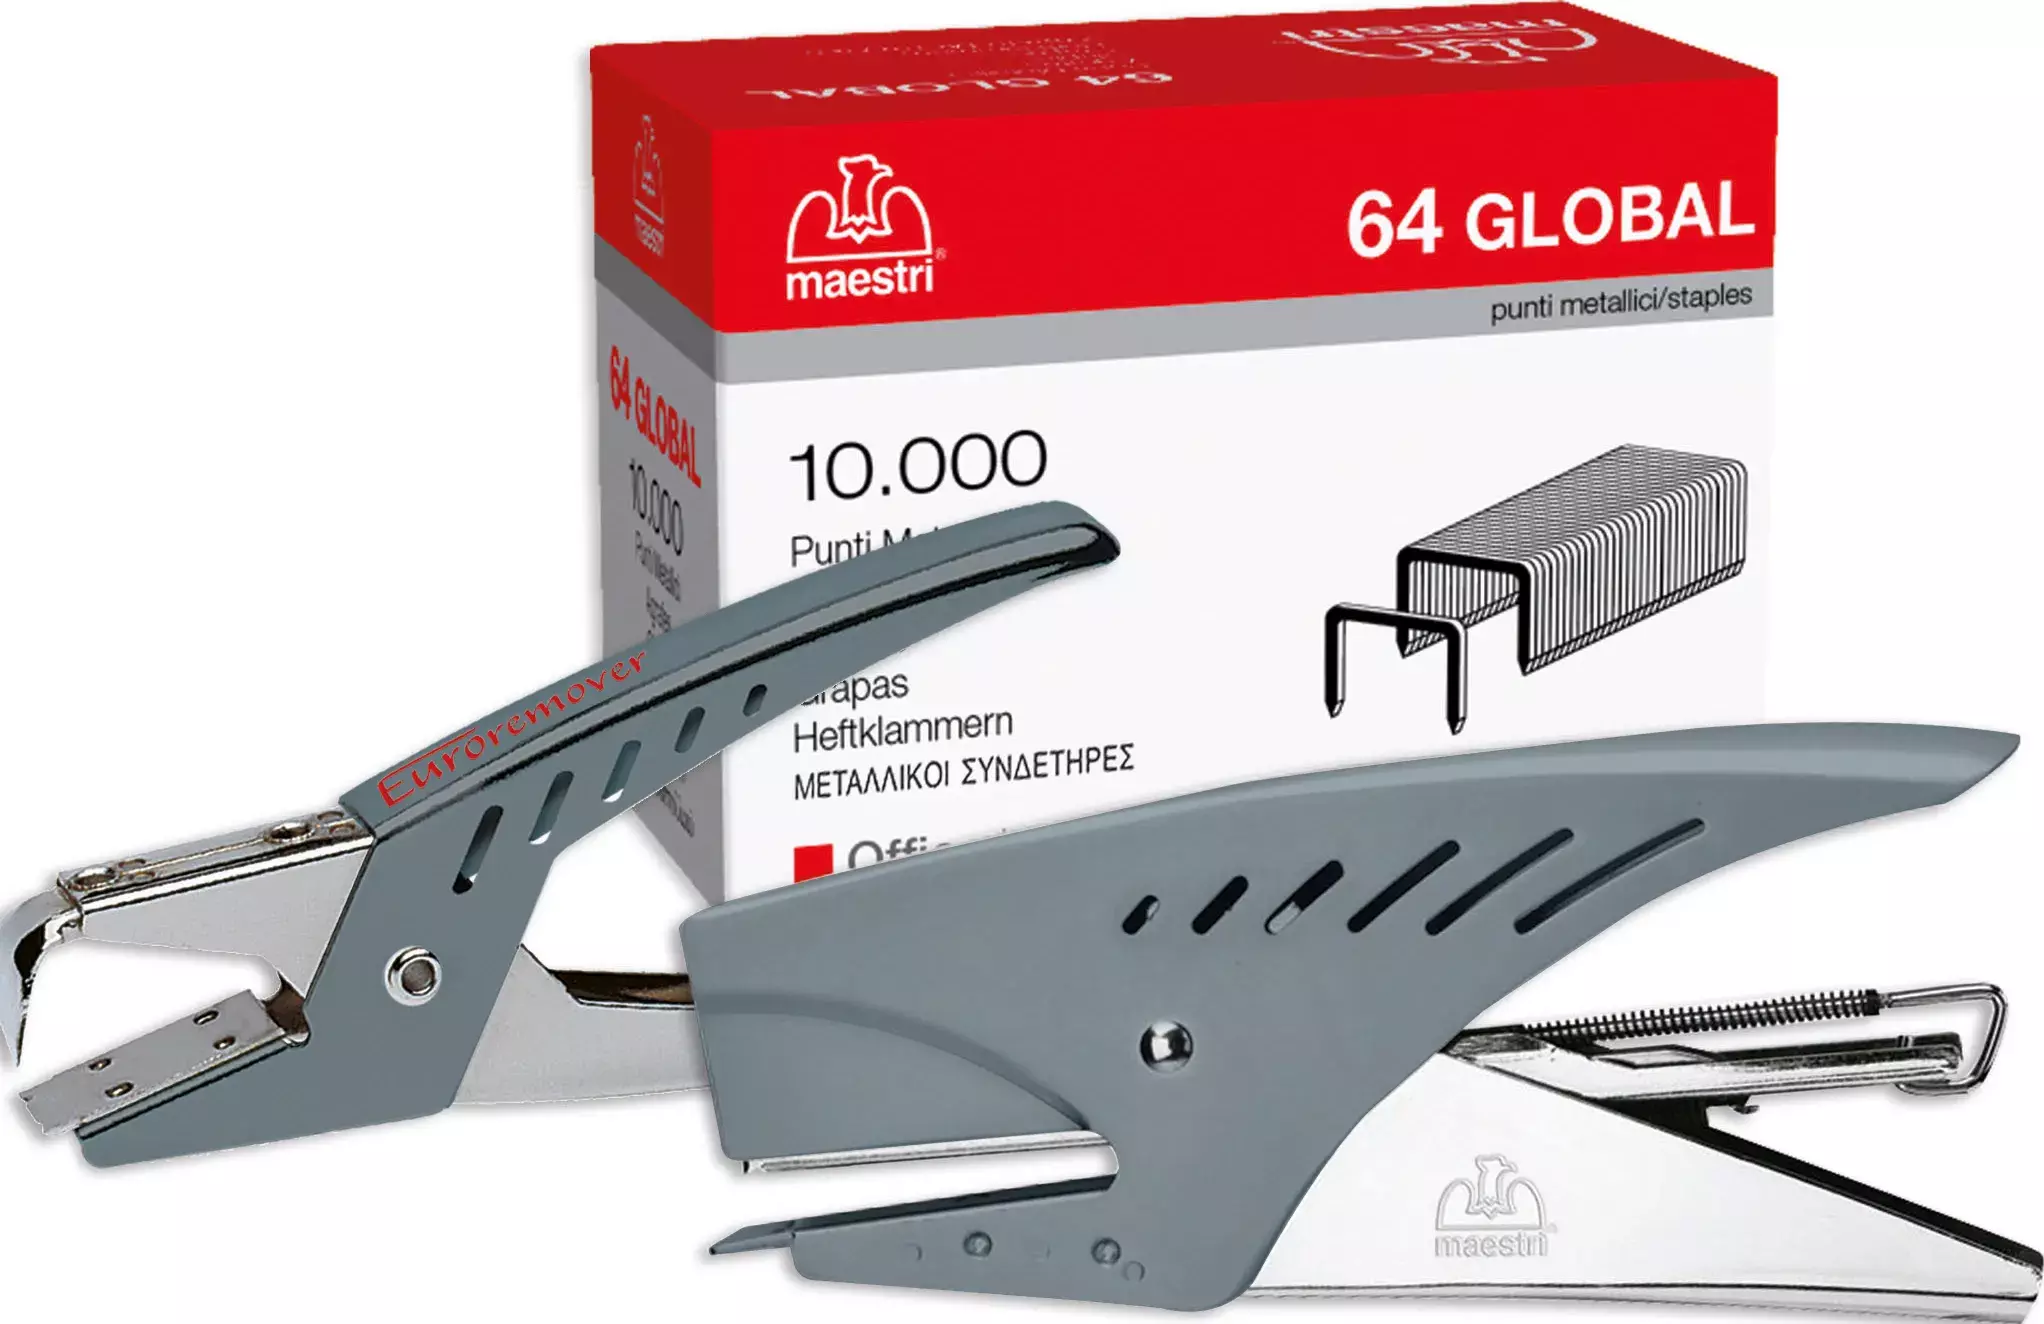 gbc n1 plier 6 - n1 remover - n10.000 punti staples  Global 64 no leaflet, utilizza punti Jolly - 64 - 68  e tutti i punti passo 6mm ROM0099206.